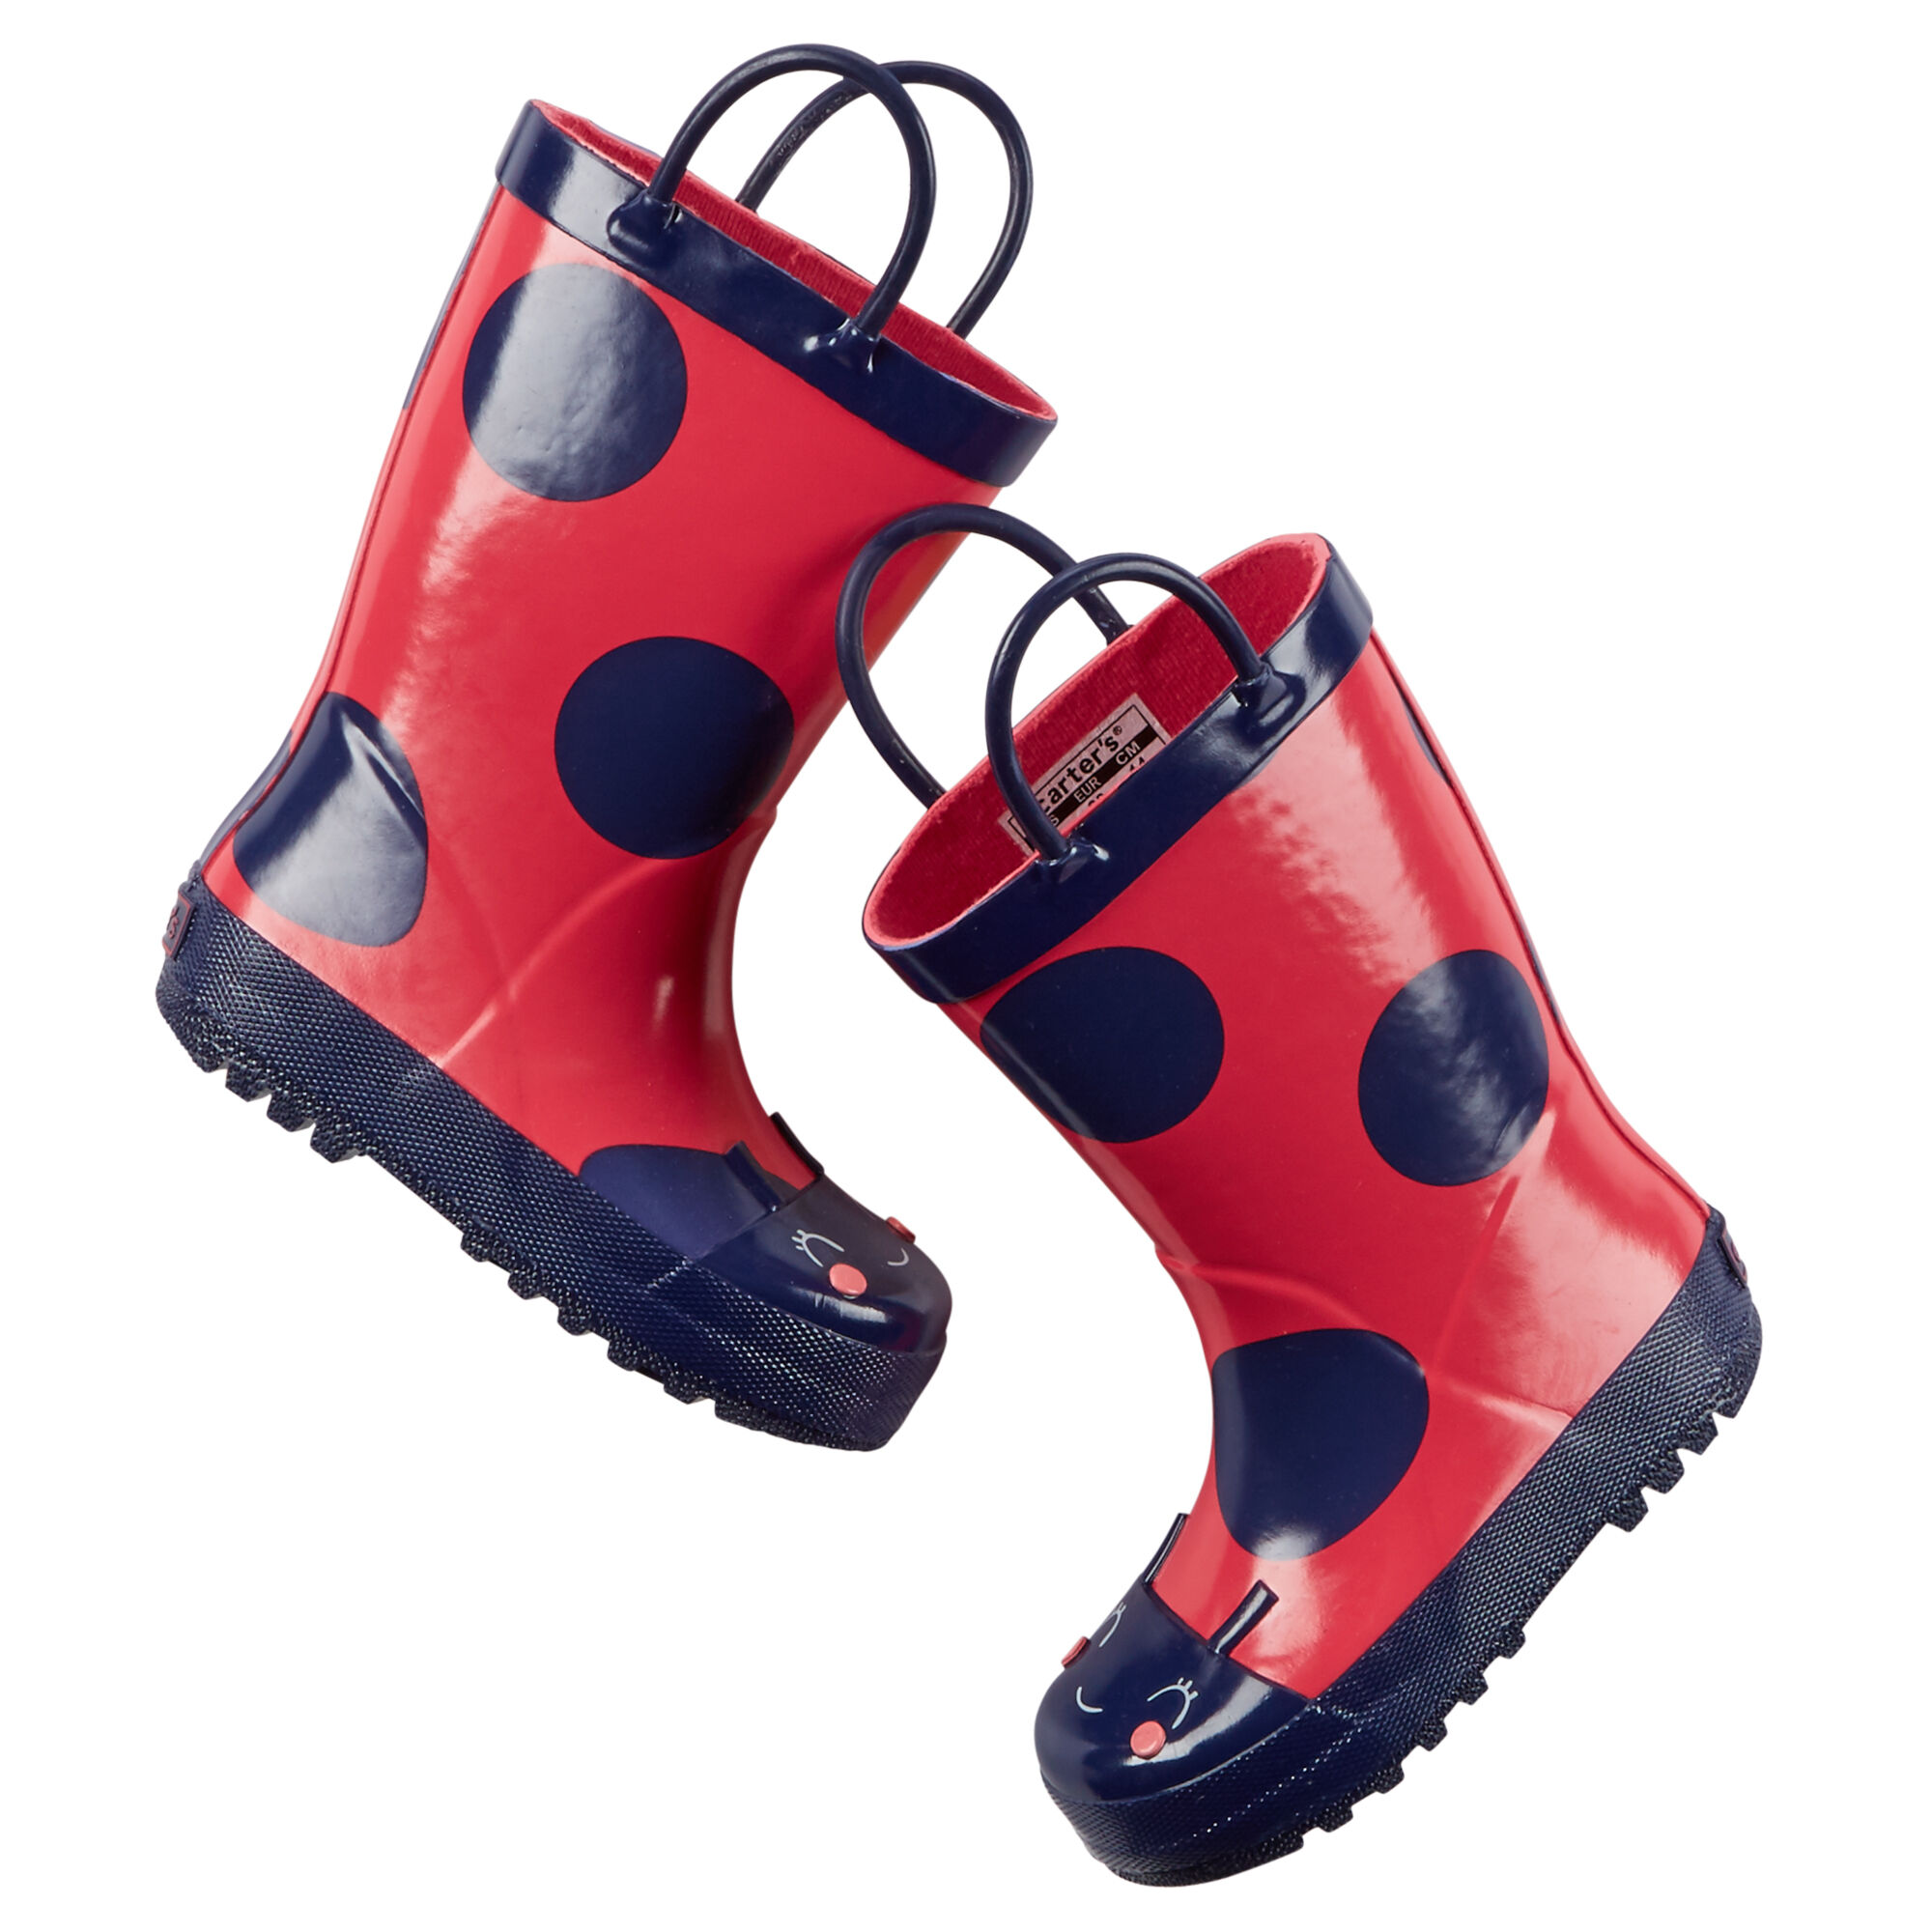 4t rain boots